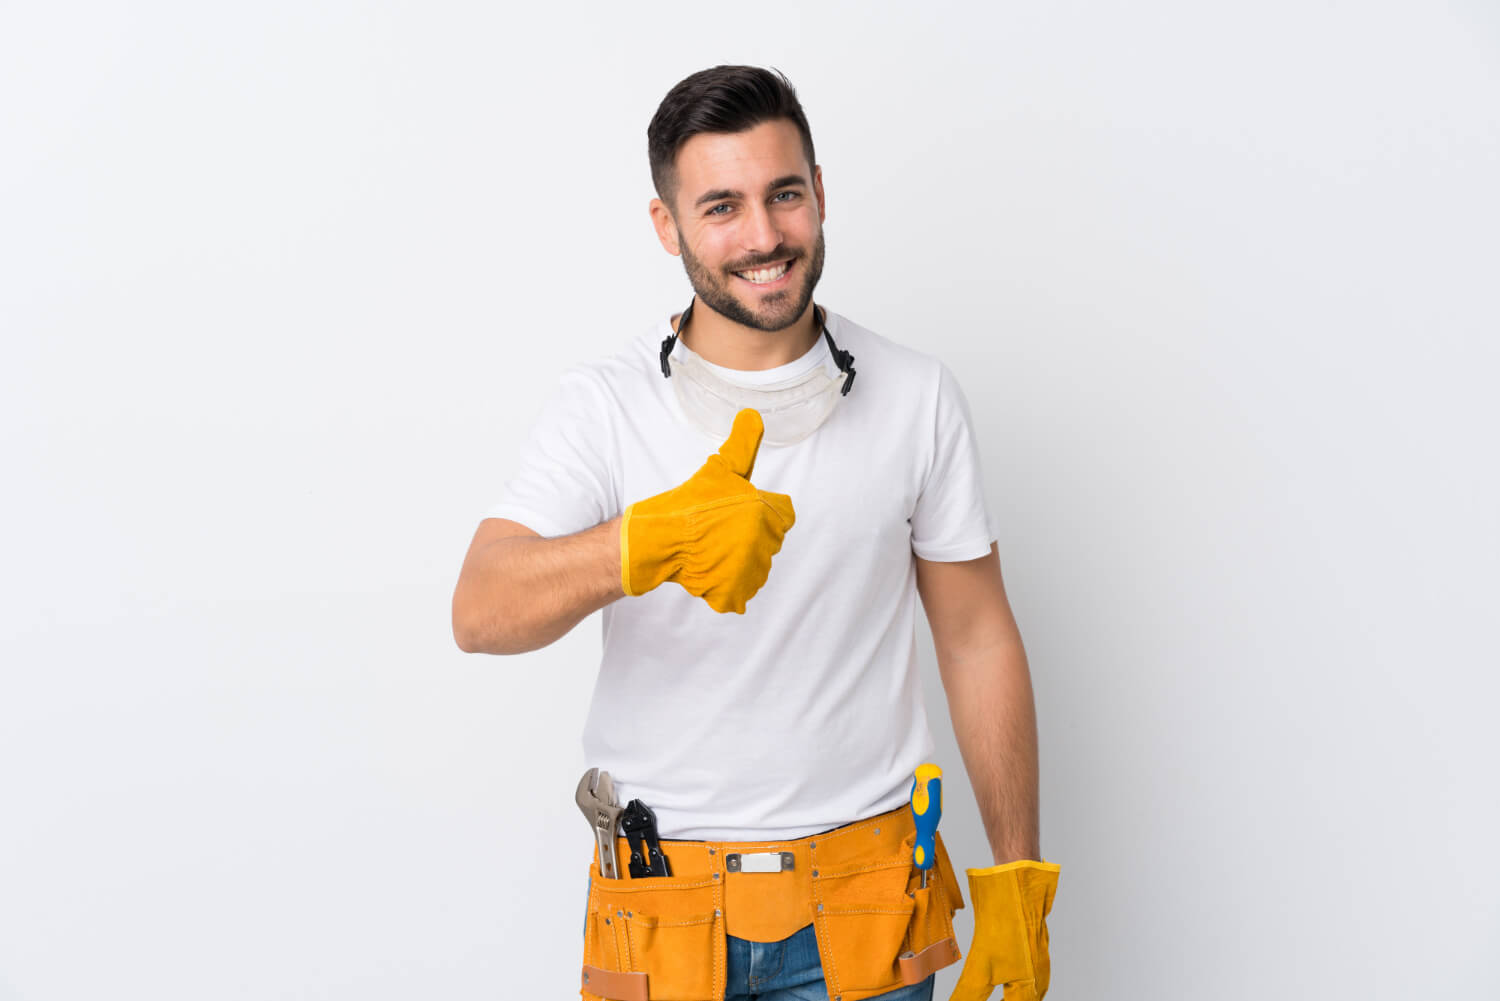 smiley handyman with orange tool box doing thumbs up on camera